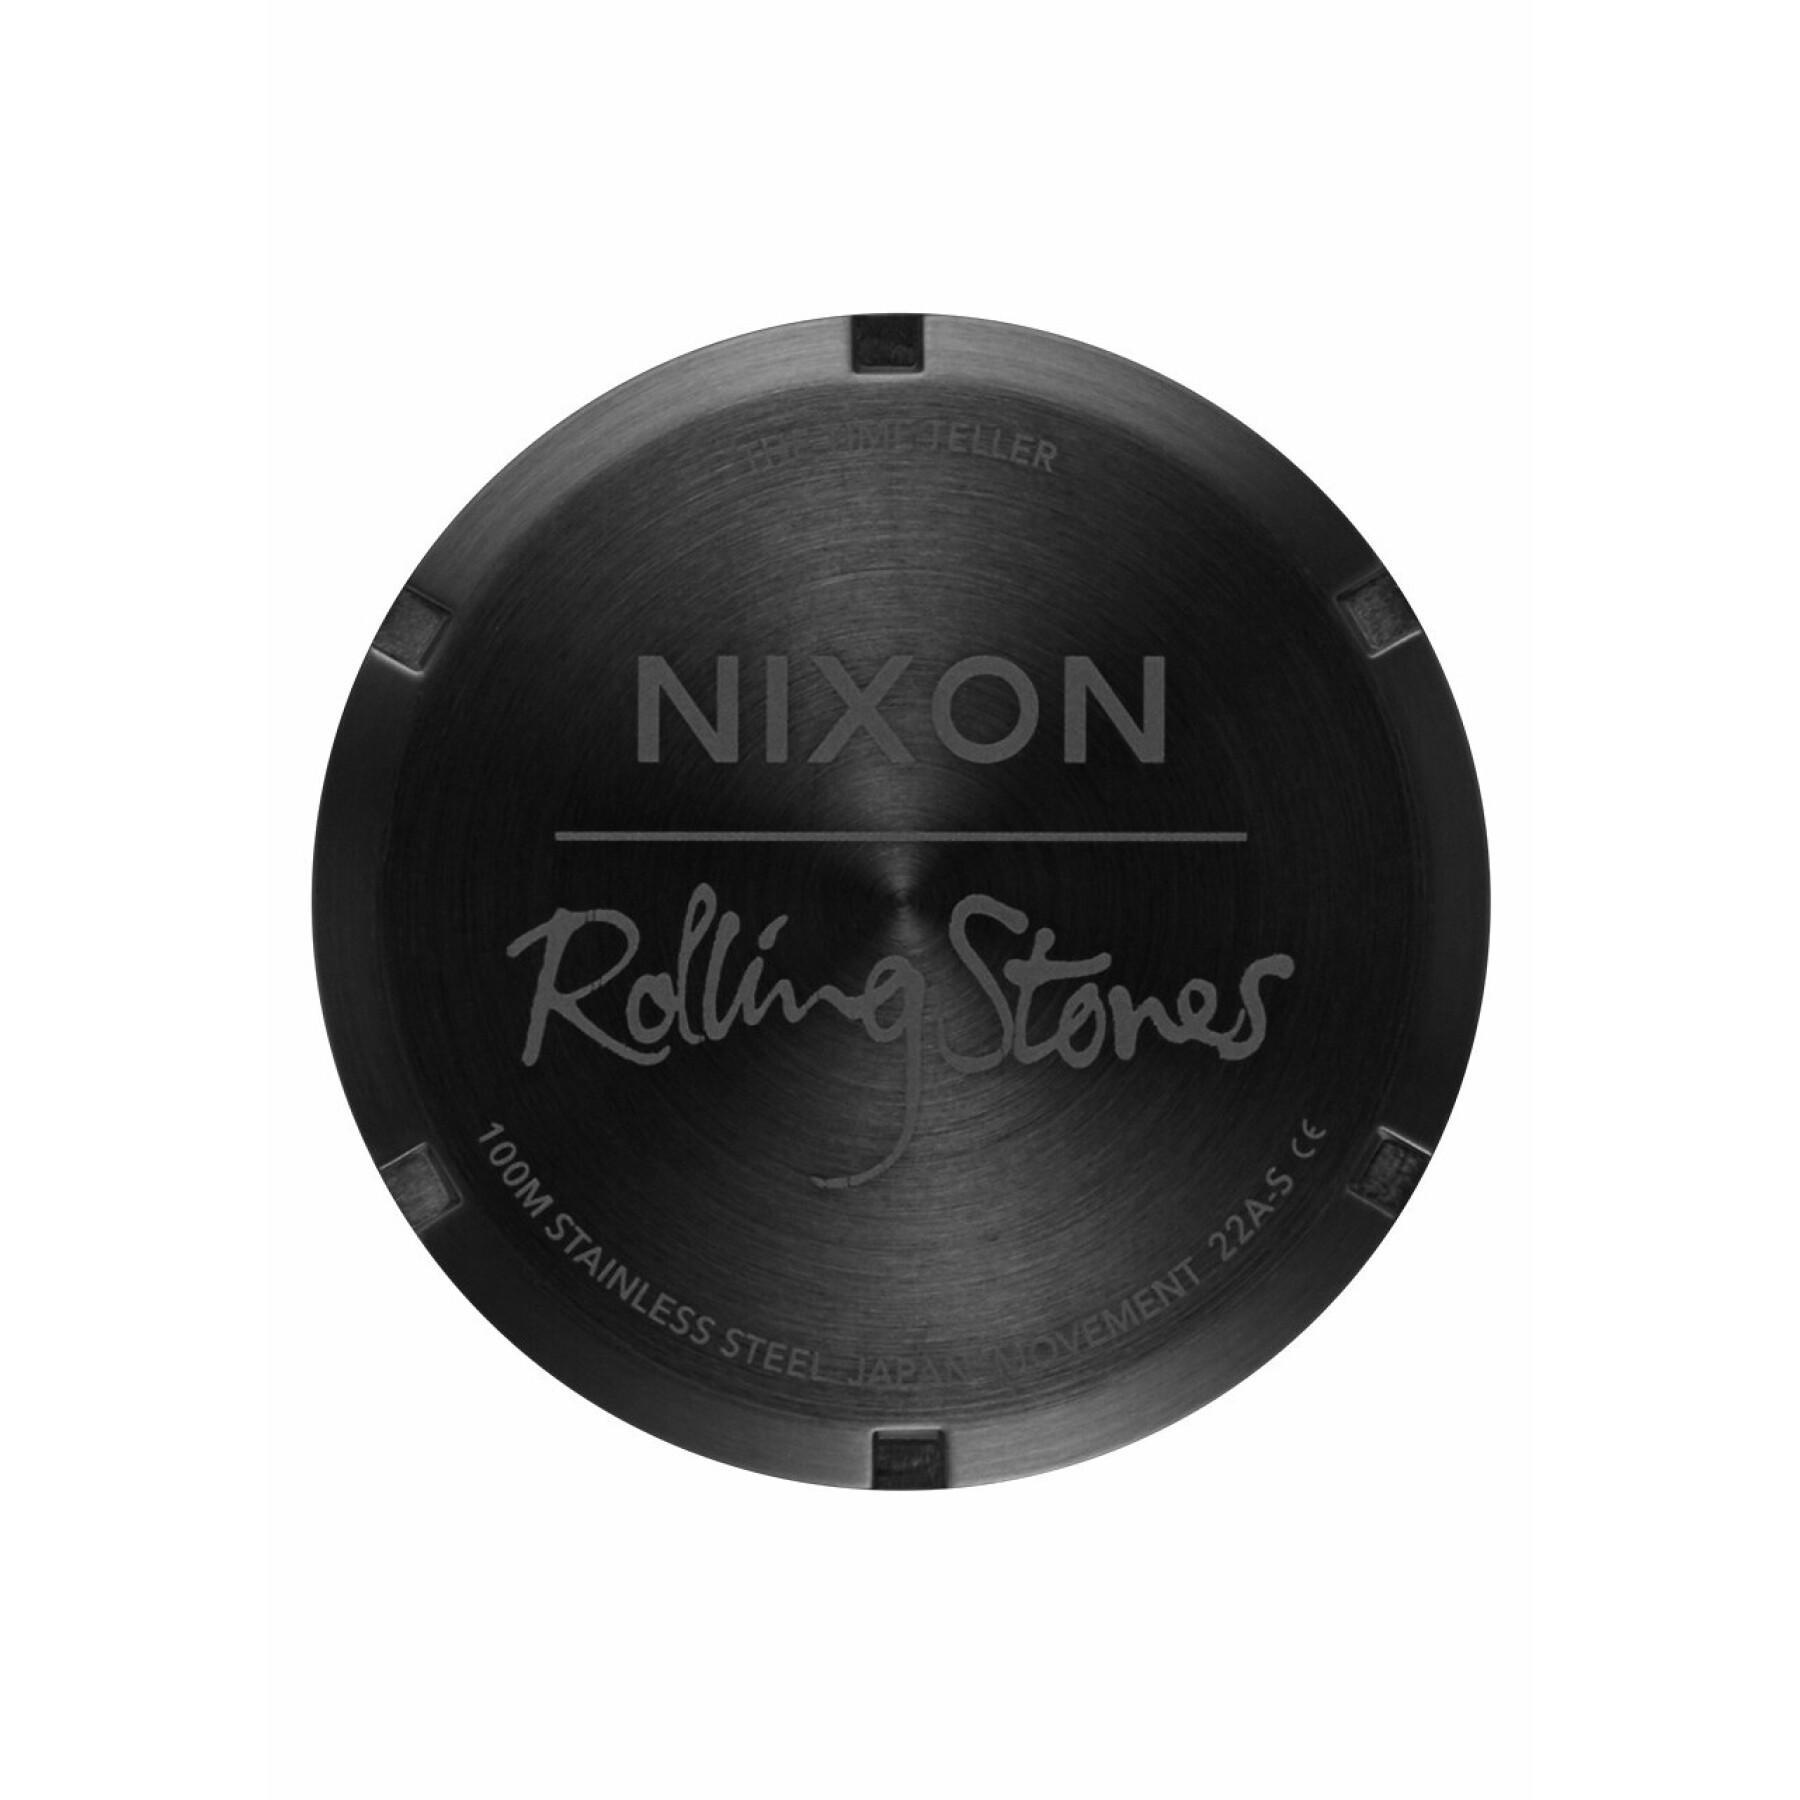 Watch Nixon Rolling Stones Time Teller